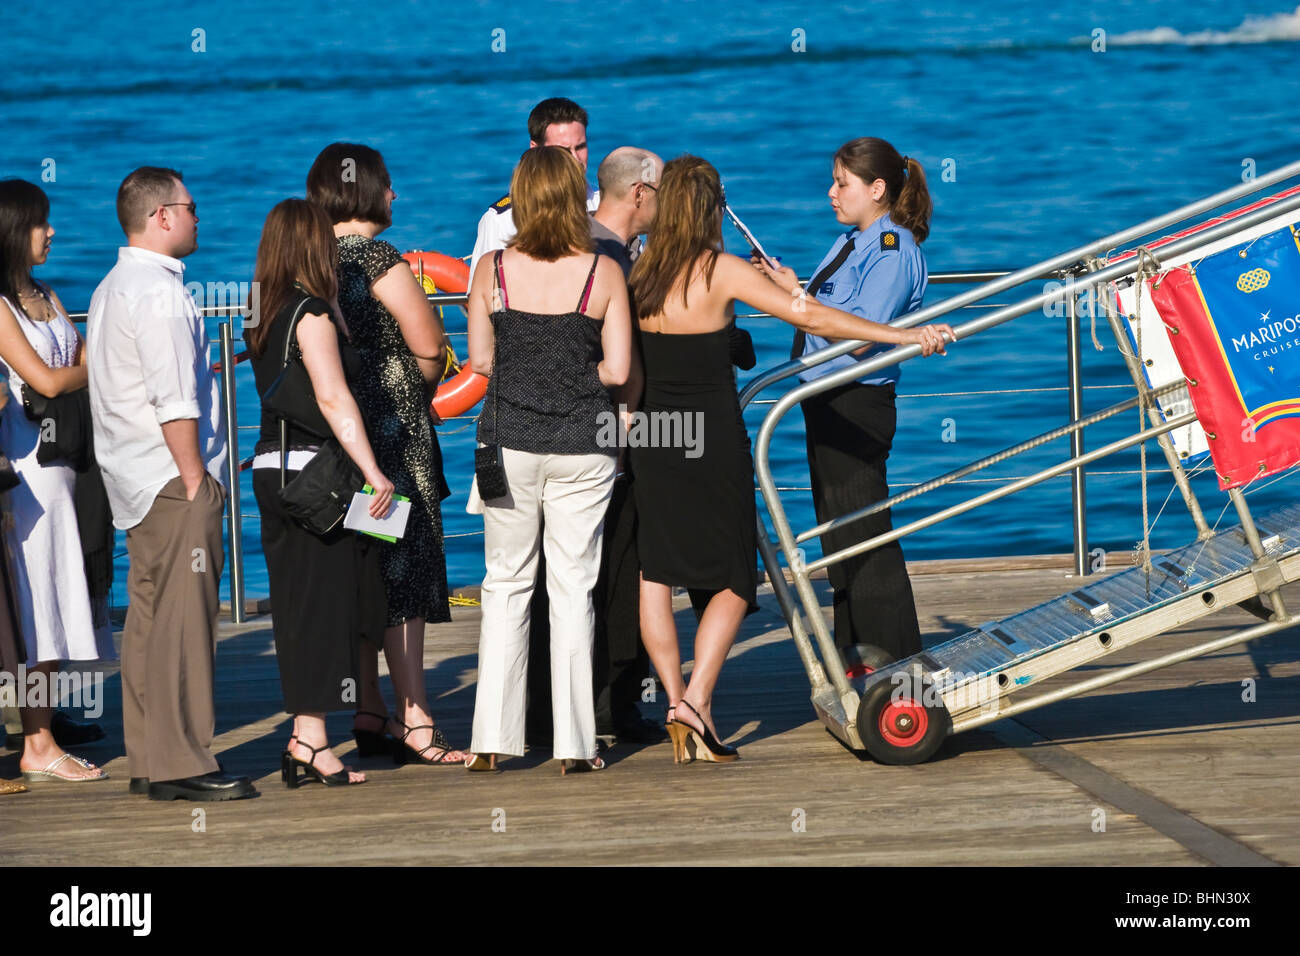 Female security officer admitting passengers onto a cruise boat, Lake Ontario, Toronto harborfront Stock Photo